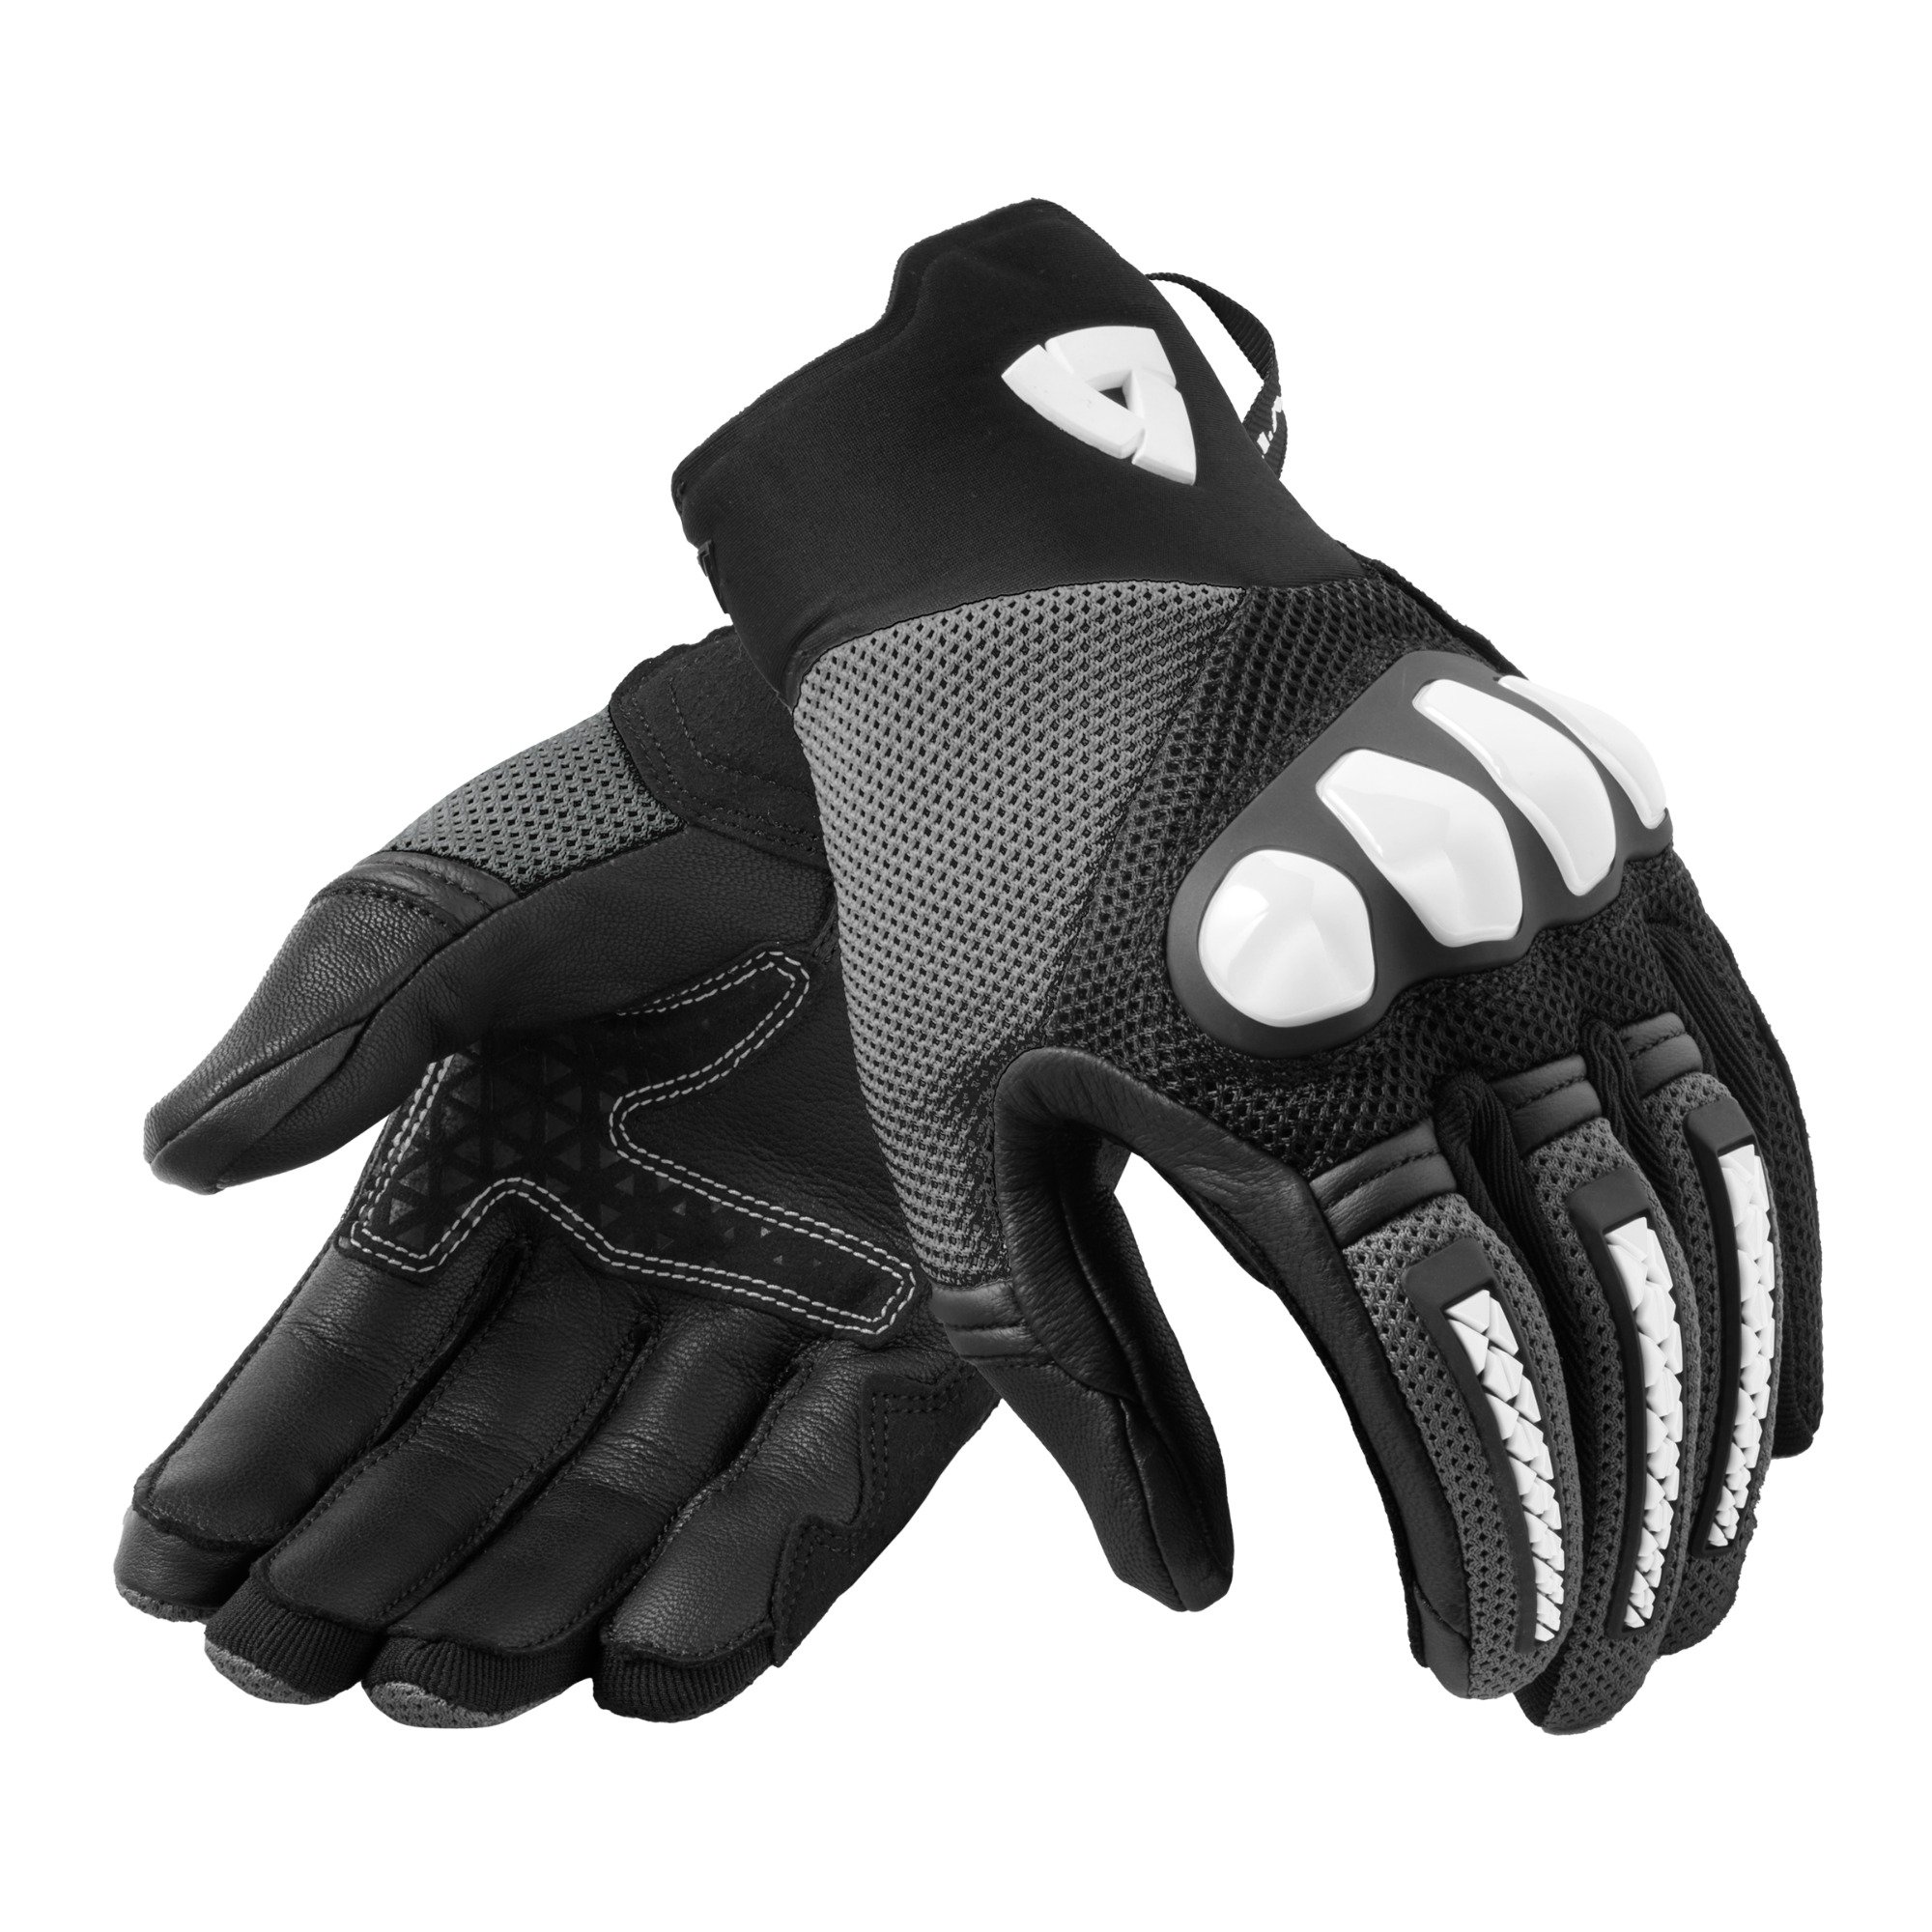 Image of REV'IT! Gloves Speedart Air Black White Size 2XL ID 8700001360890